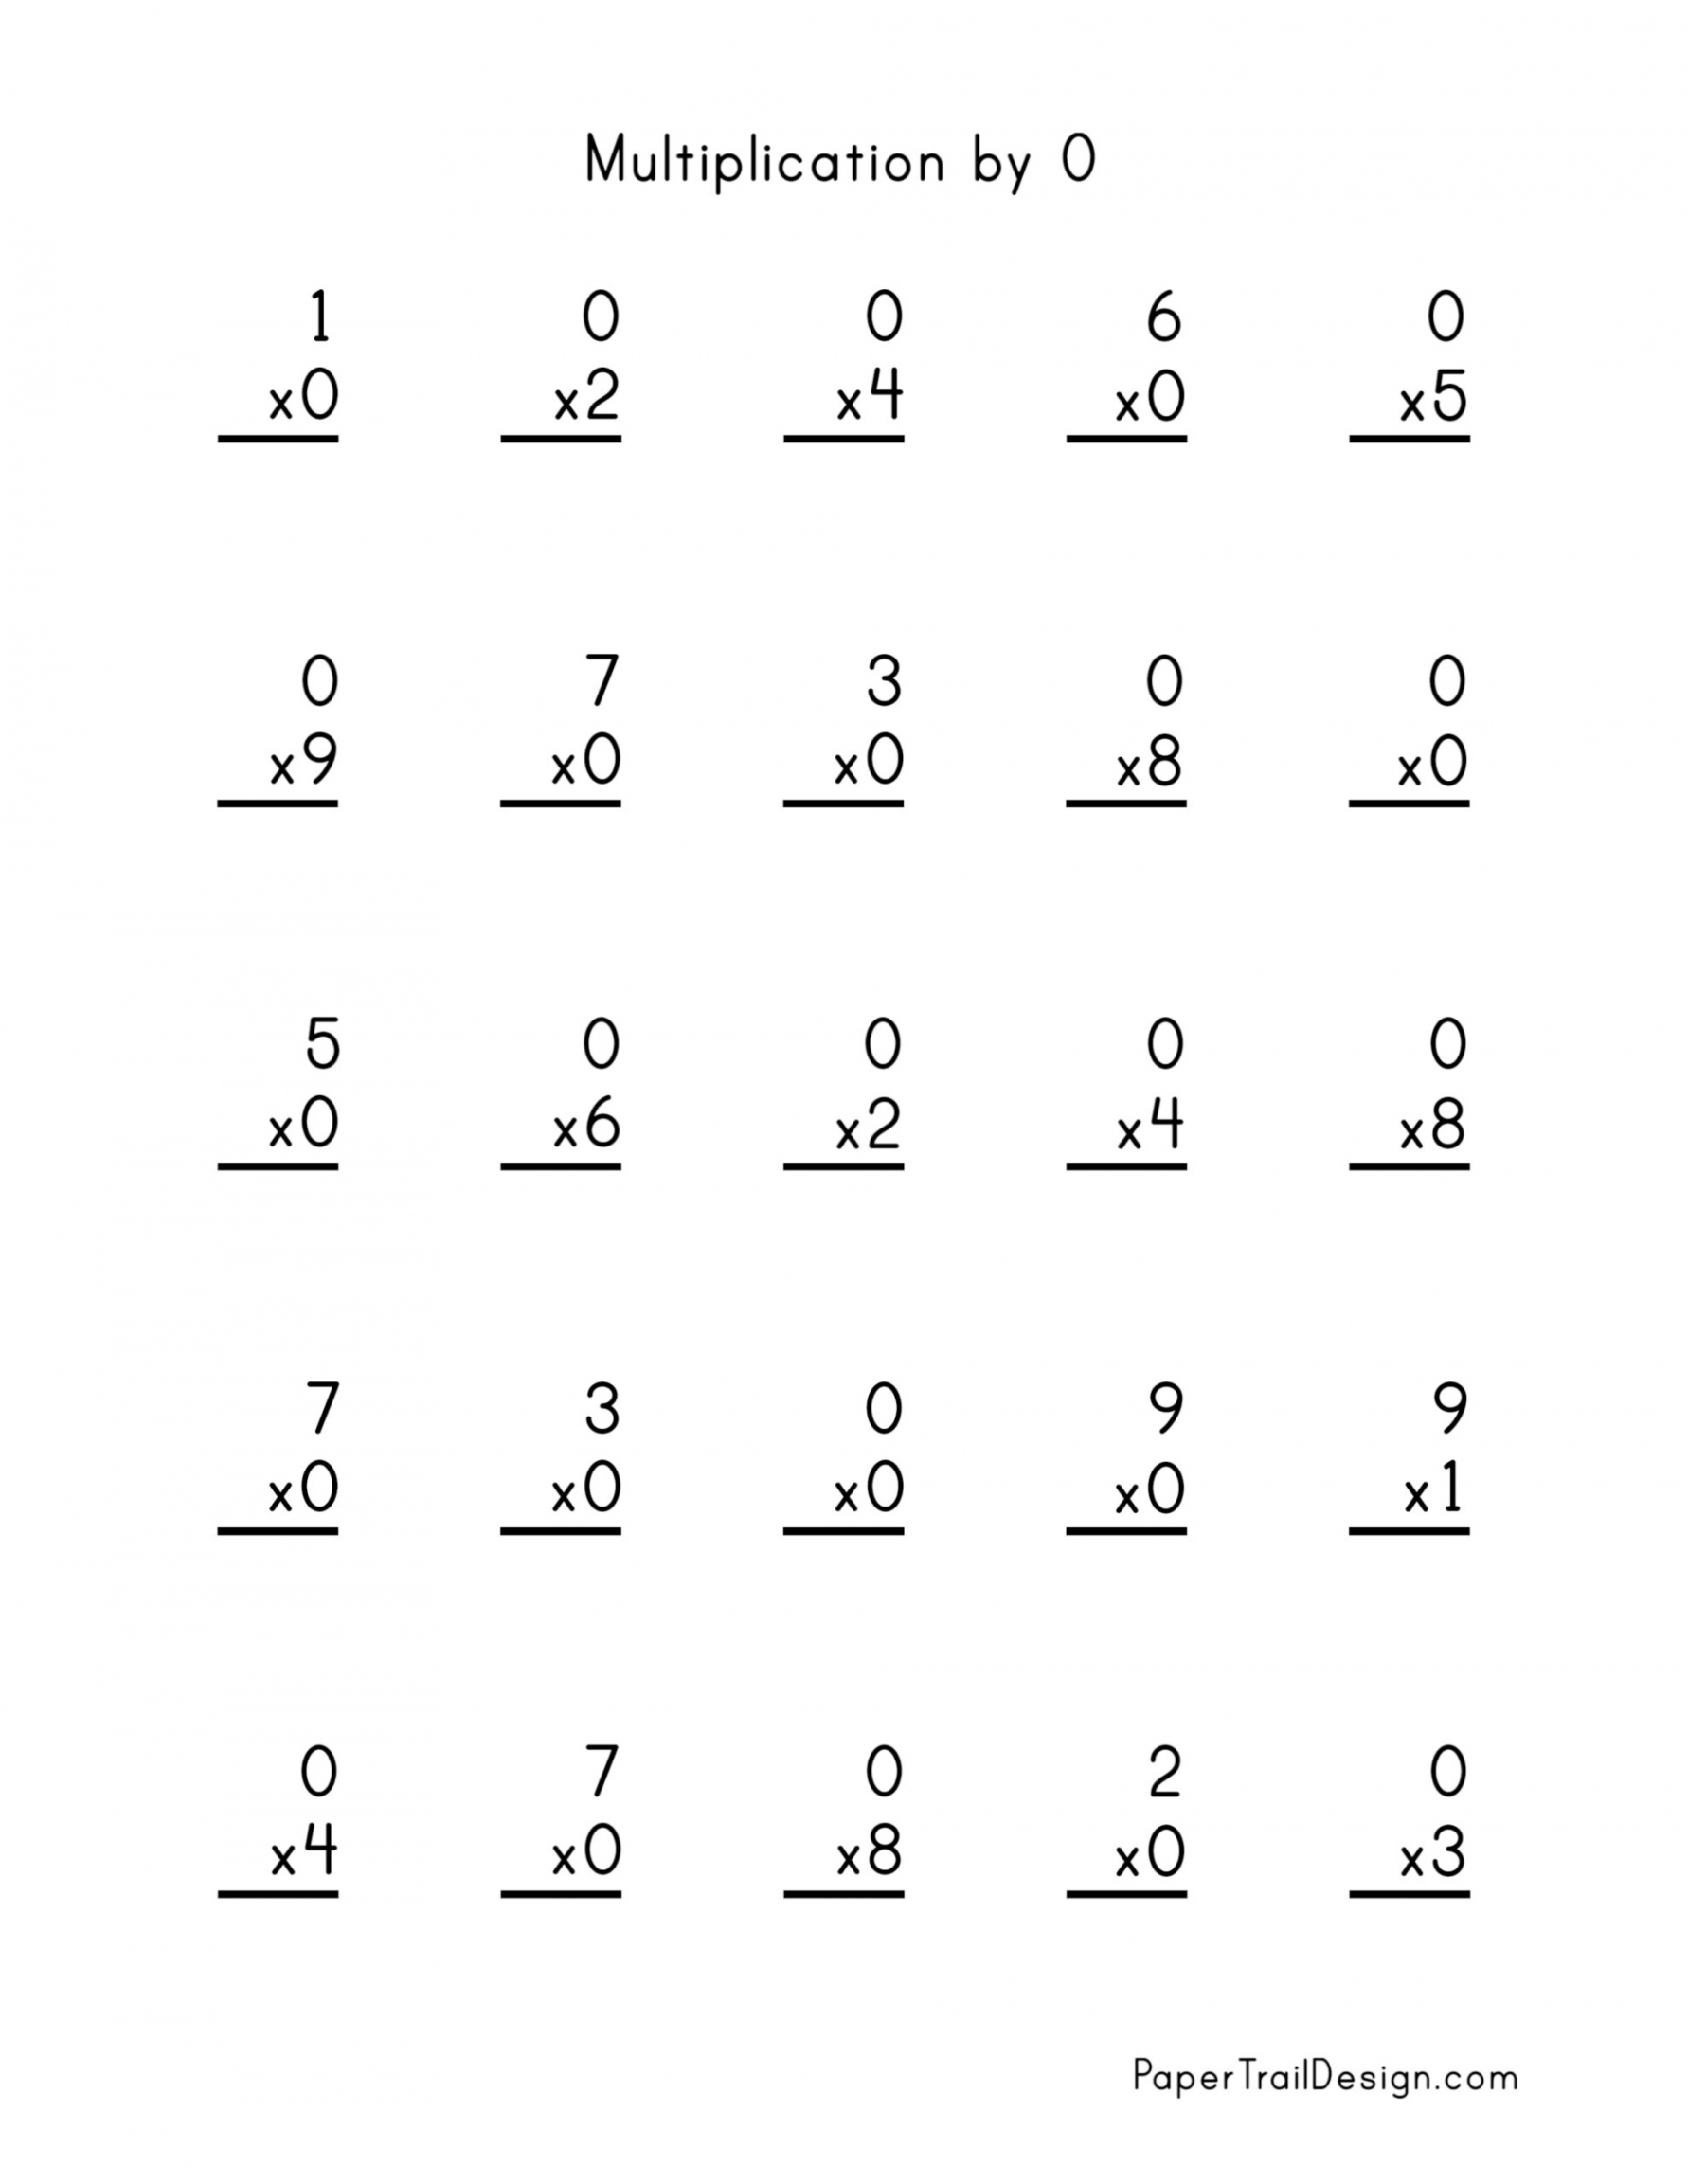 Free Multiplication Worksheets Printable - Printable - Free Multiplication Worksheets -2 - Paper Trail Design